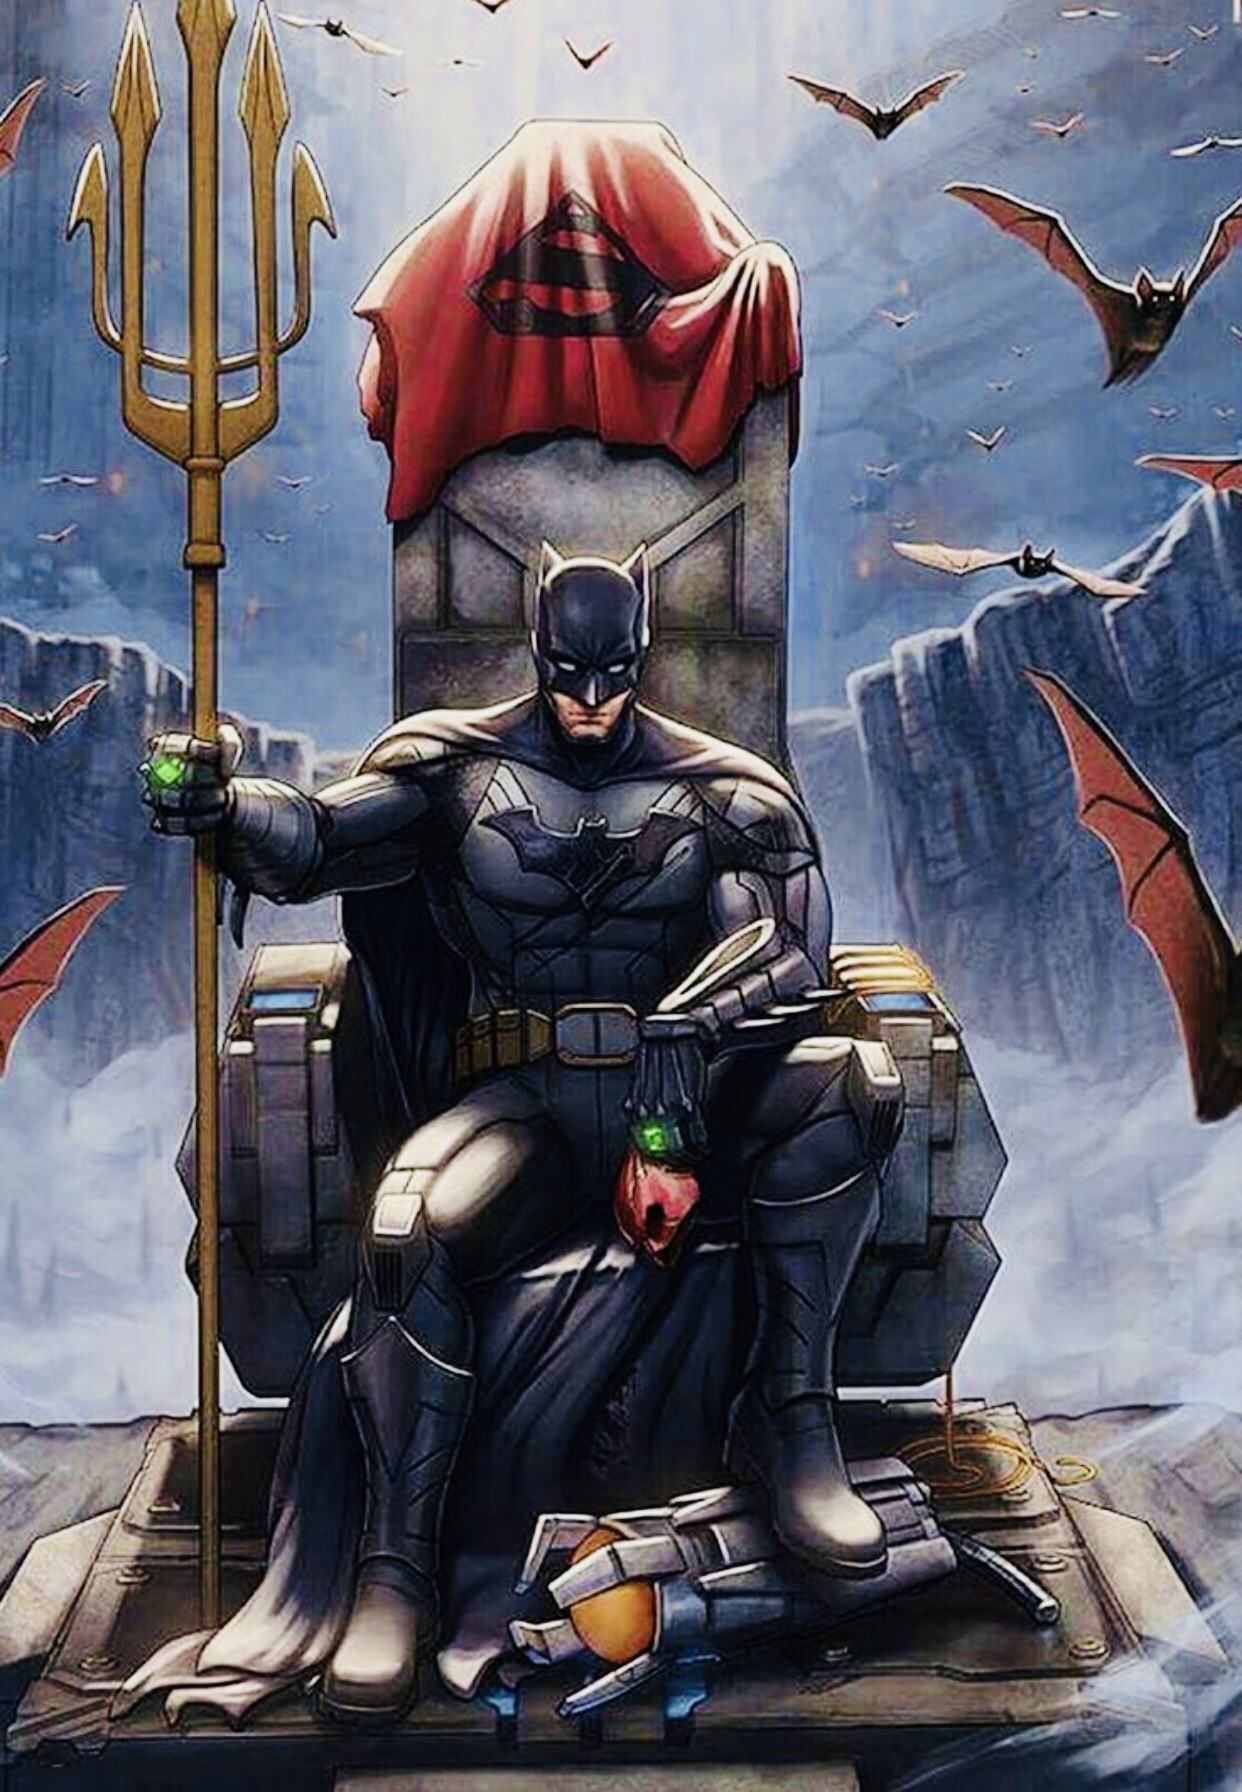 Spider Flash 23 - Batman defeats Justice League